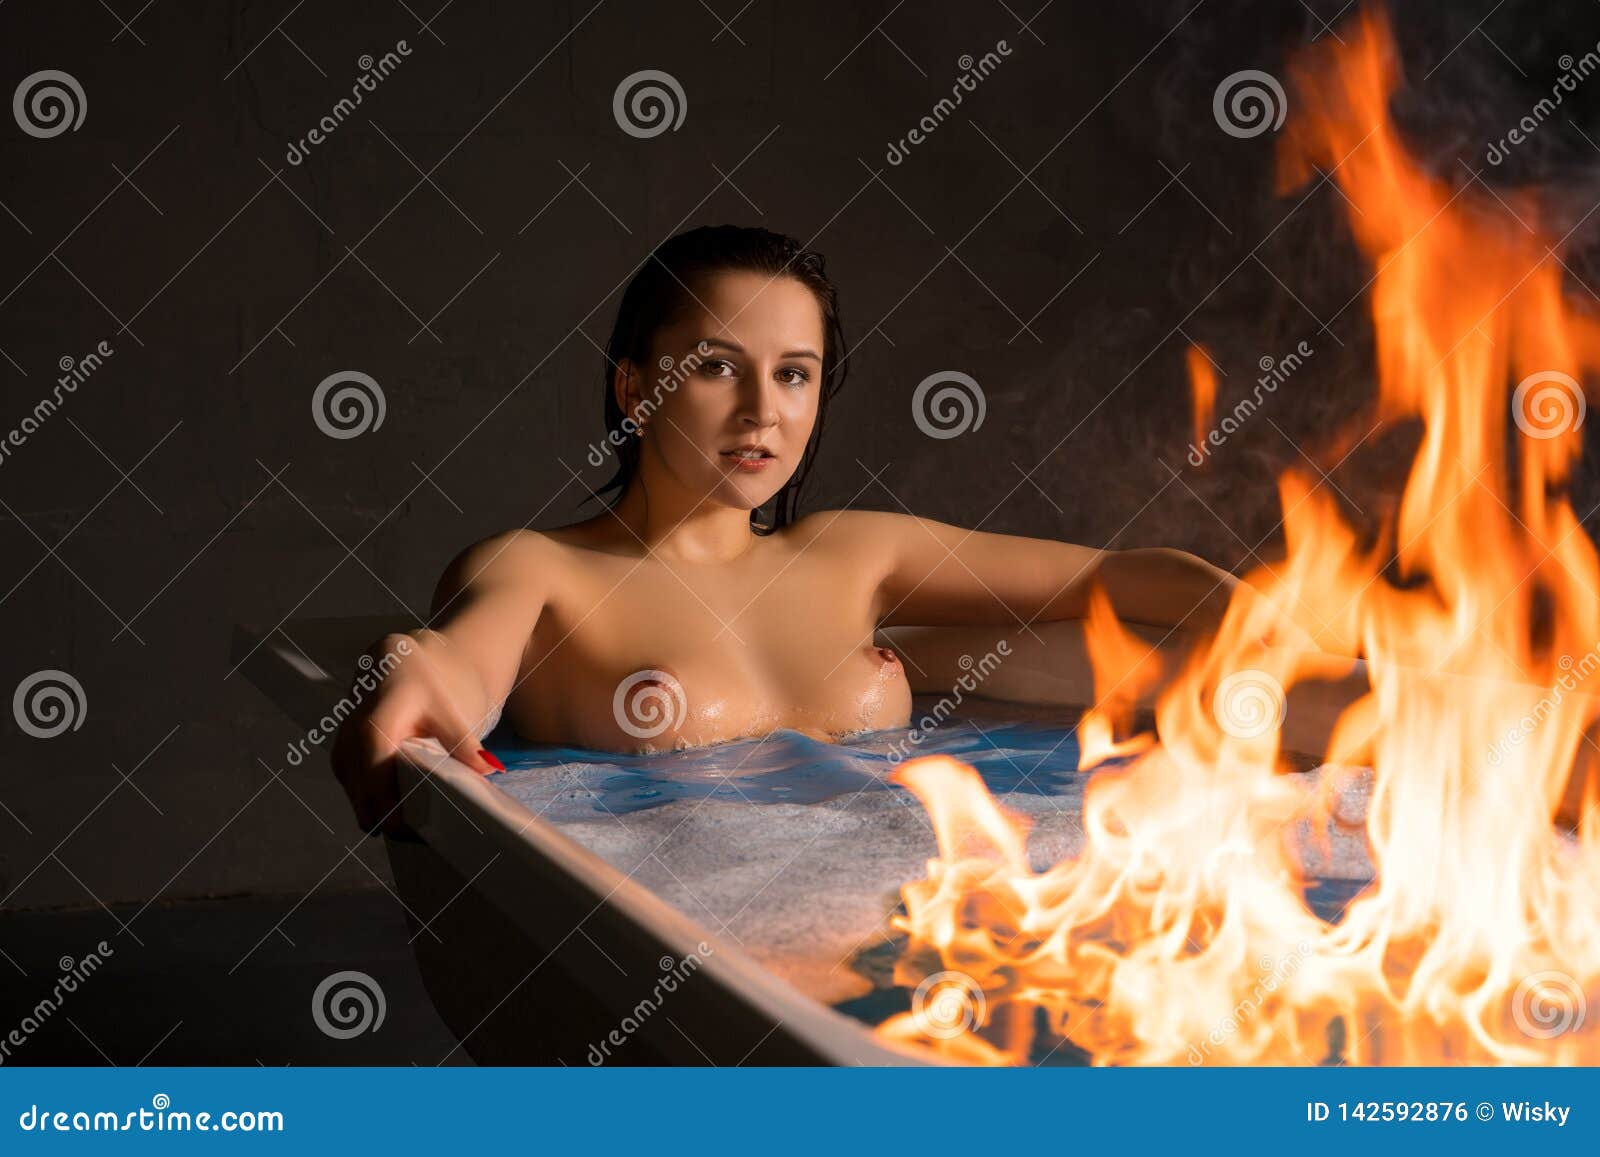 Fire Burning Porn Pix Caroline Flack